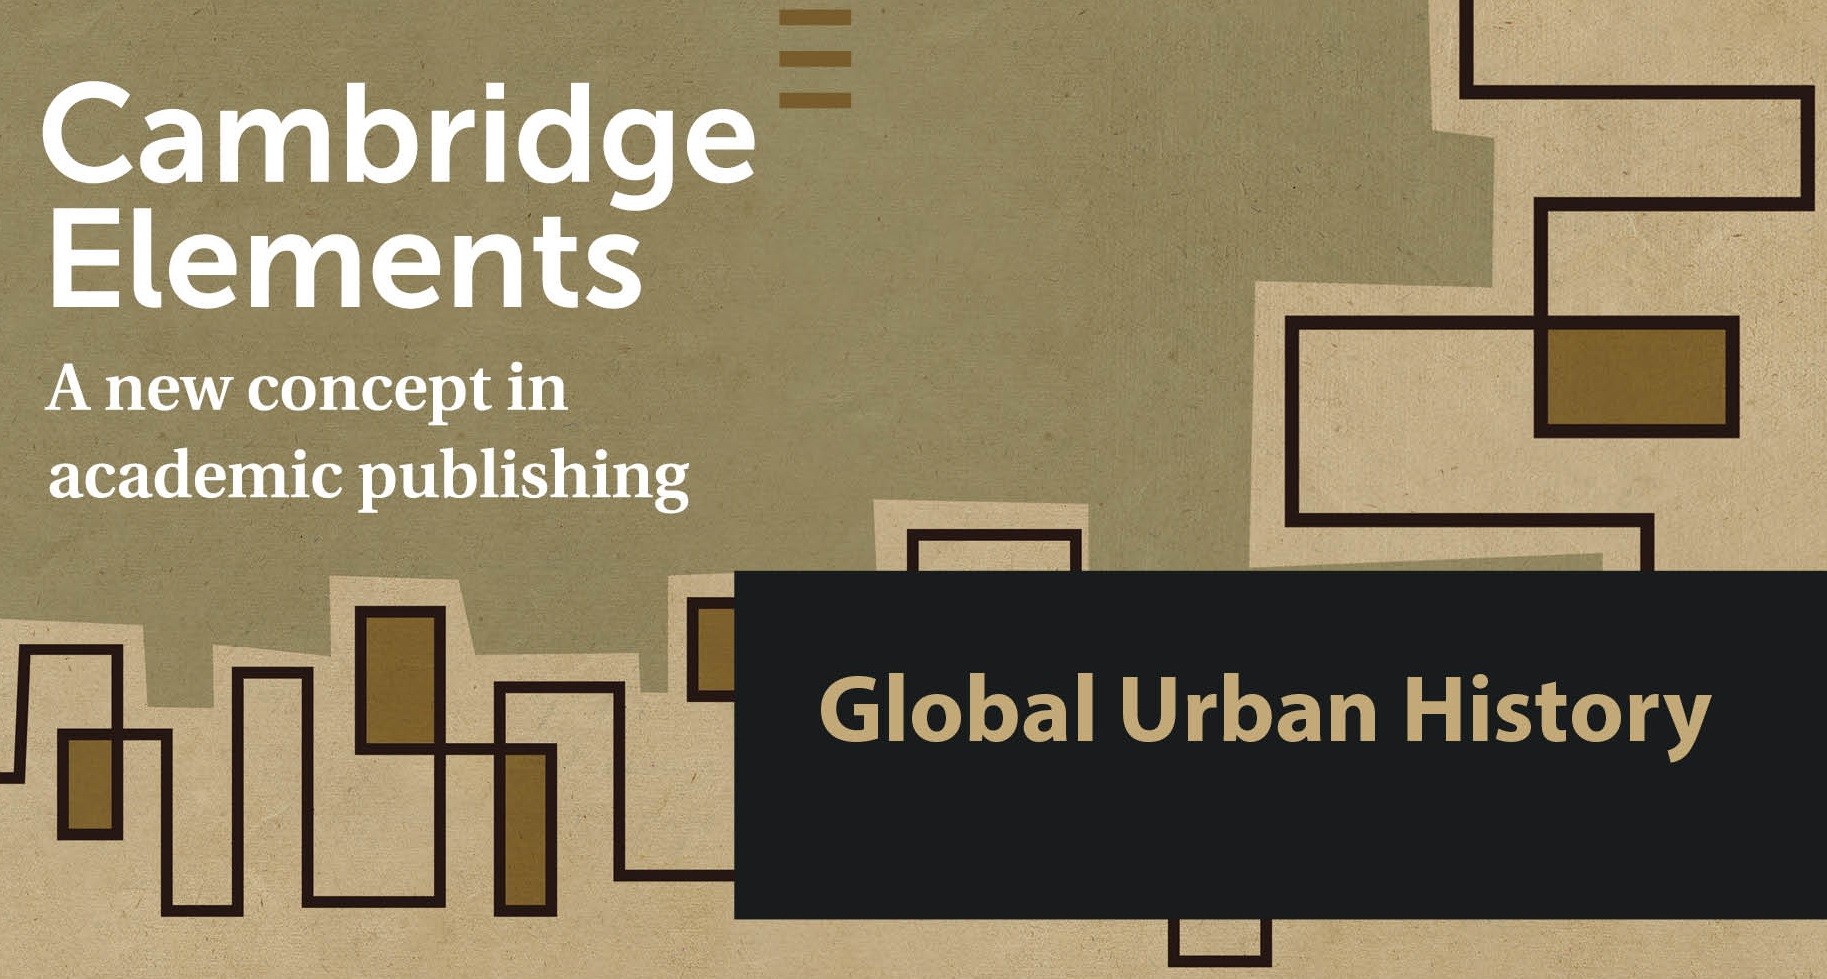 Global Urban History elements series